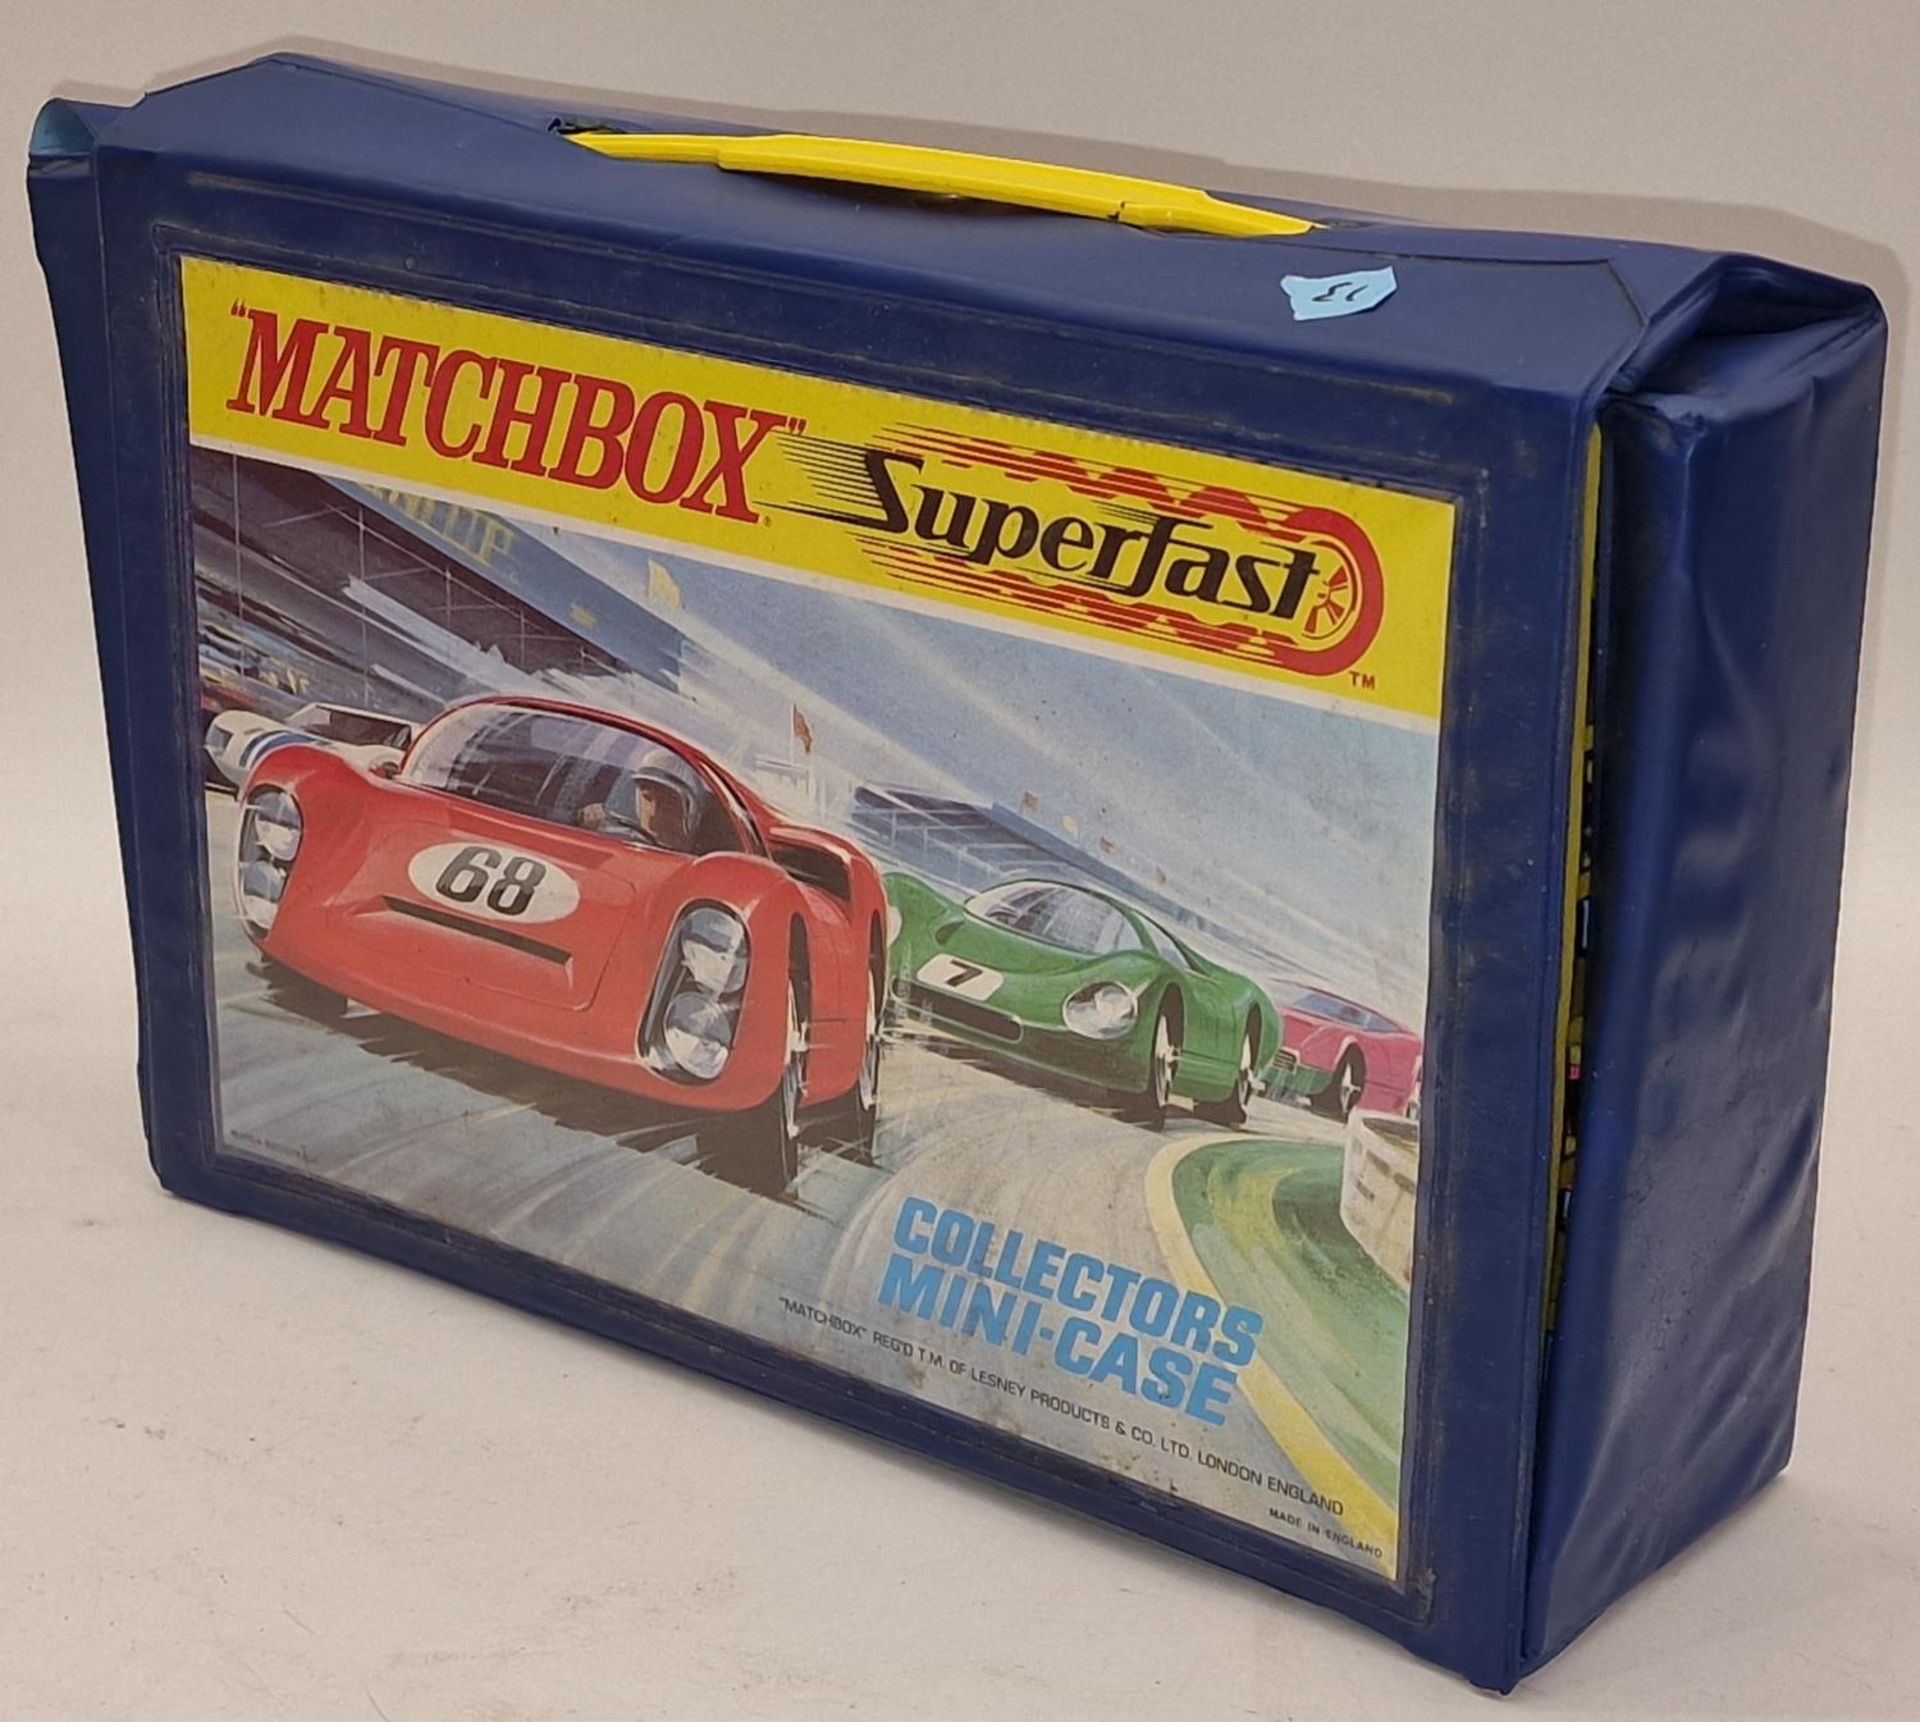 Matchbox Superfast vintage full collectors mini case of Matchbox die cast cars. - Image 4 of 4